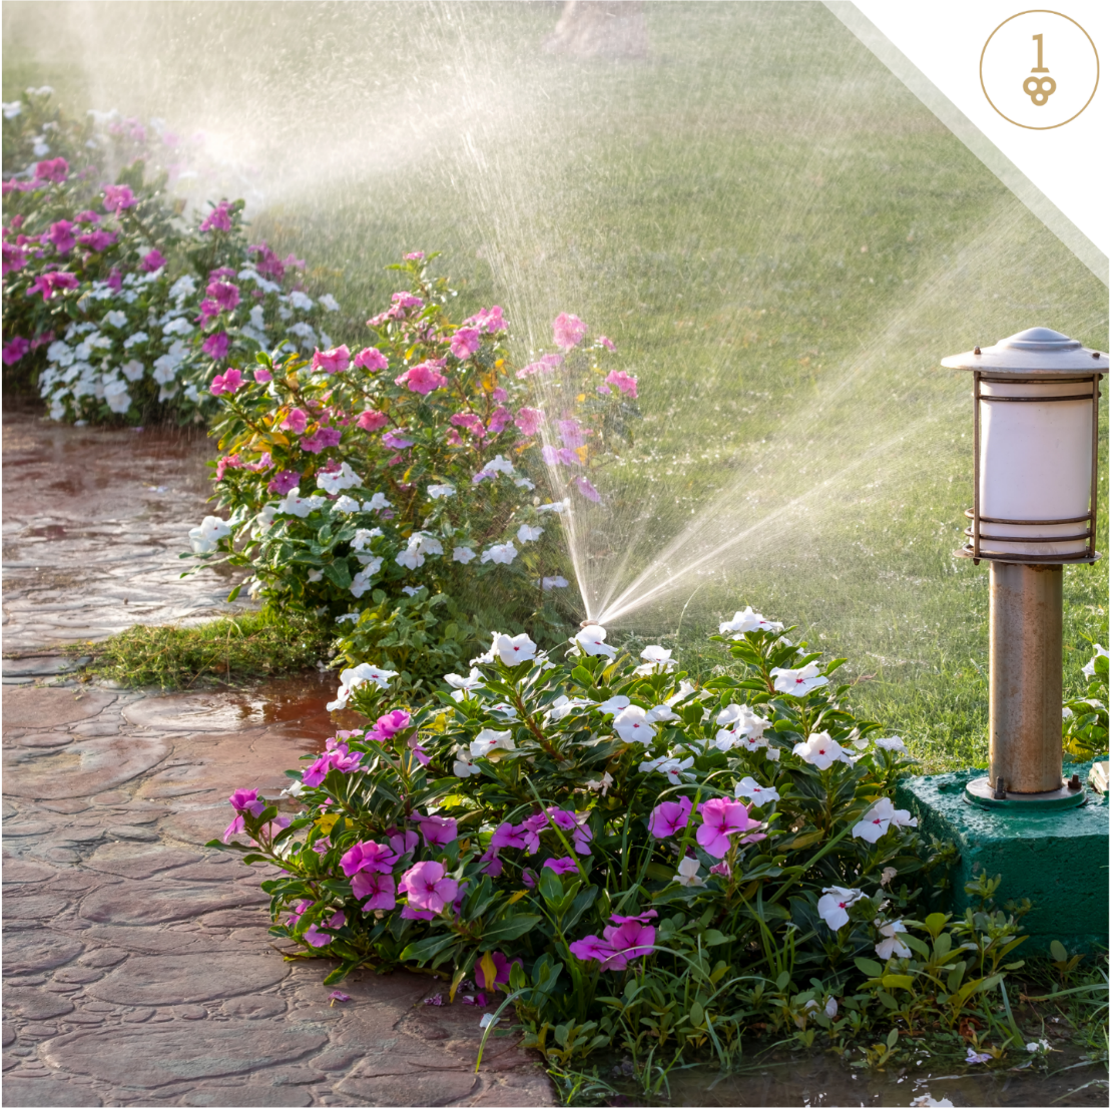 a sprinkler is spraying water on flowers in a garden.